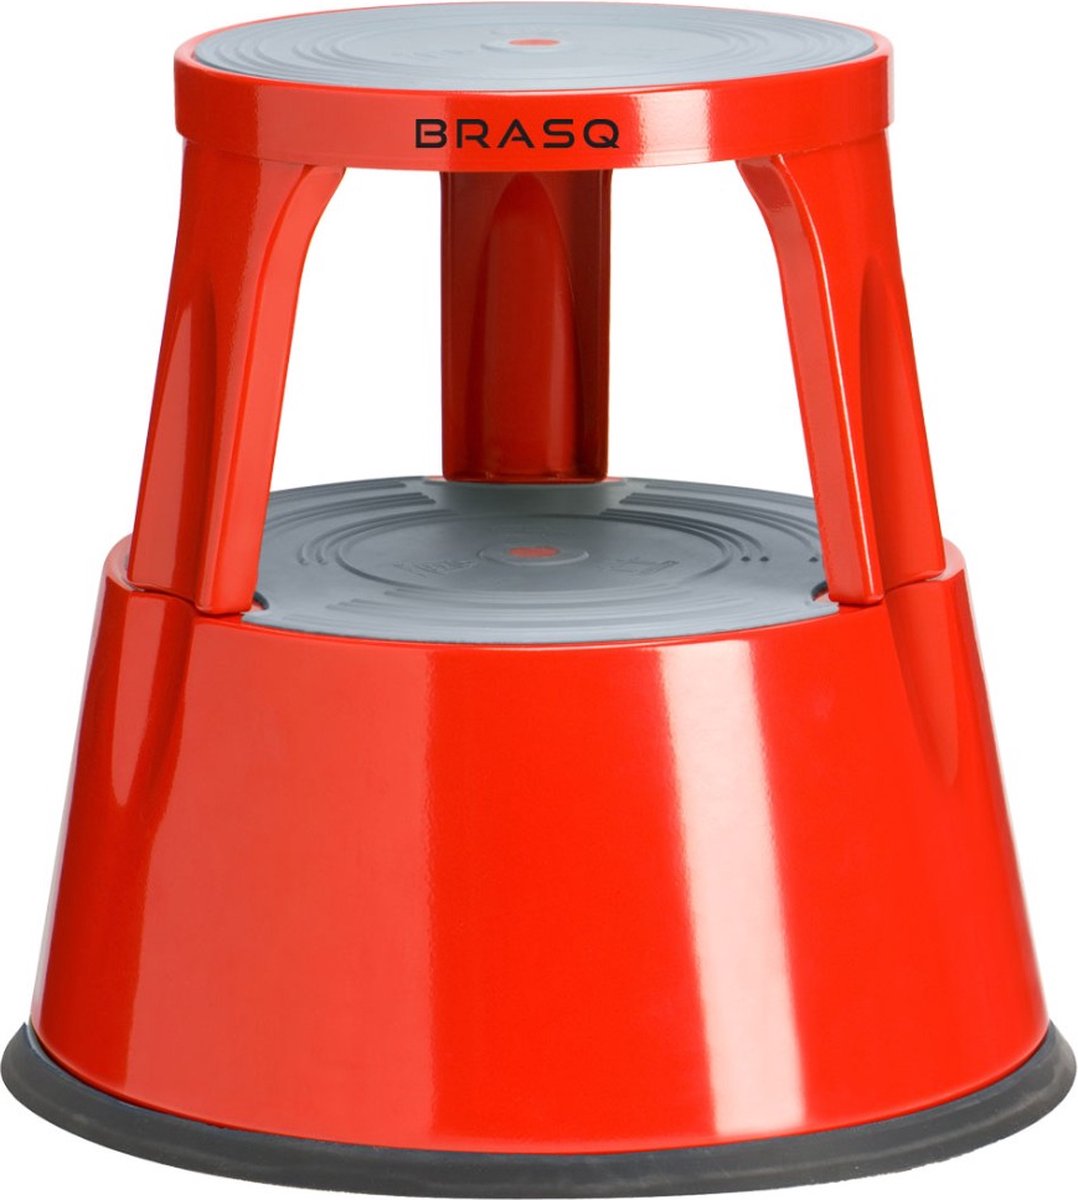 BRASQ Opstapkrukje Verrijdbaar Premium Grijs metaal ST300 draagvermogen 150 kg, opstapkruk, olifantenvoet, kantoorkruk, trap, roltrap, kruk